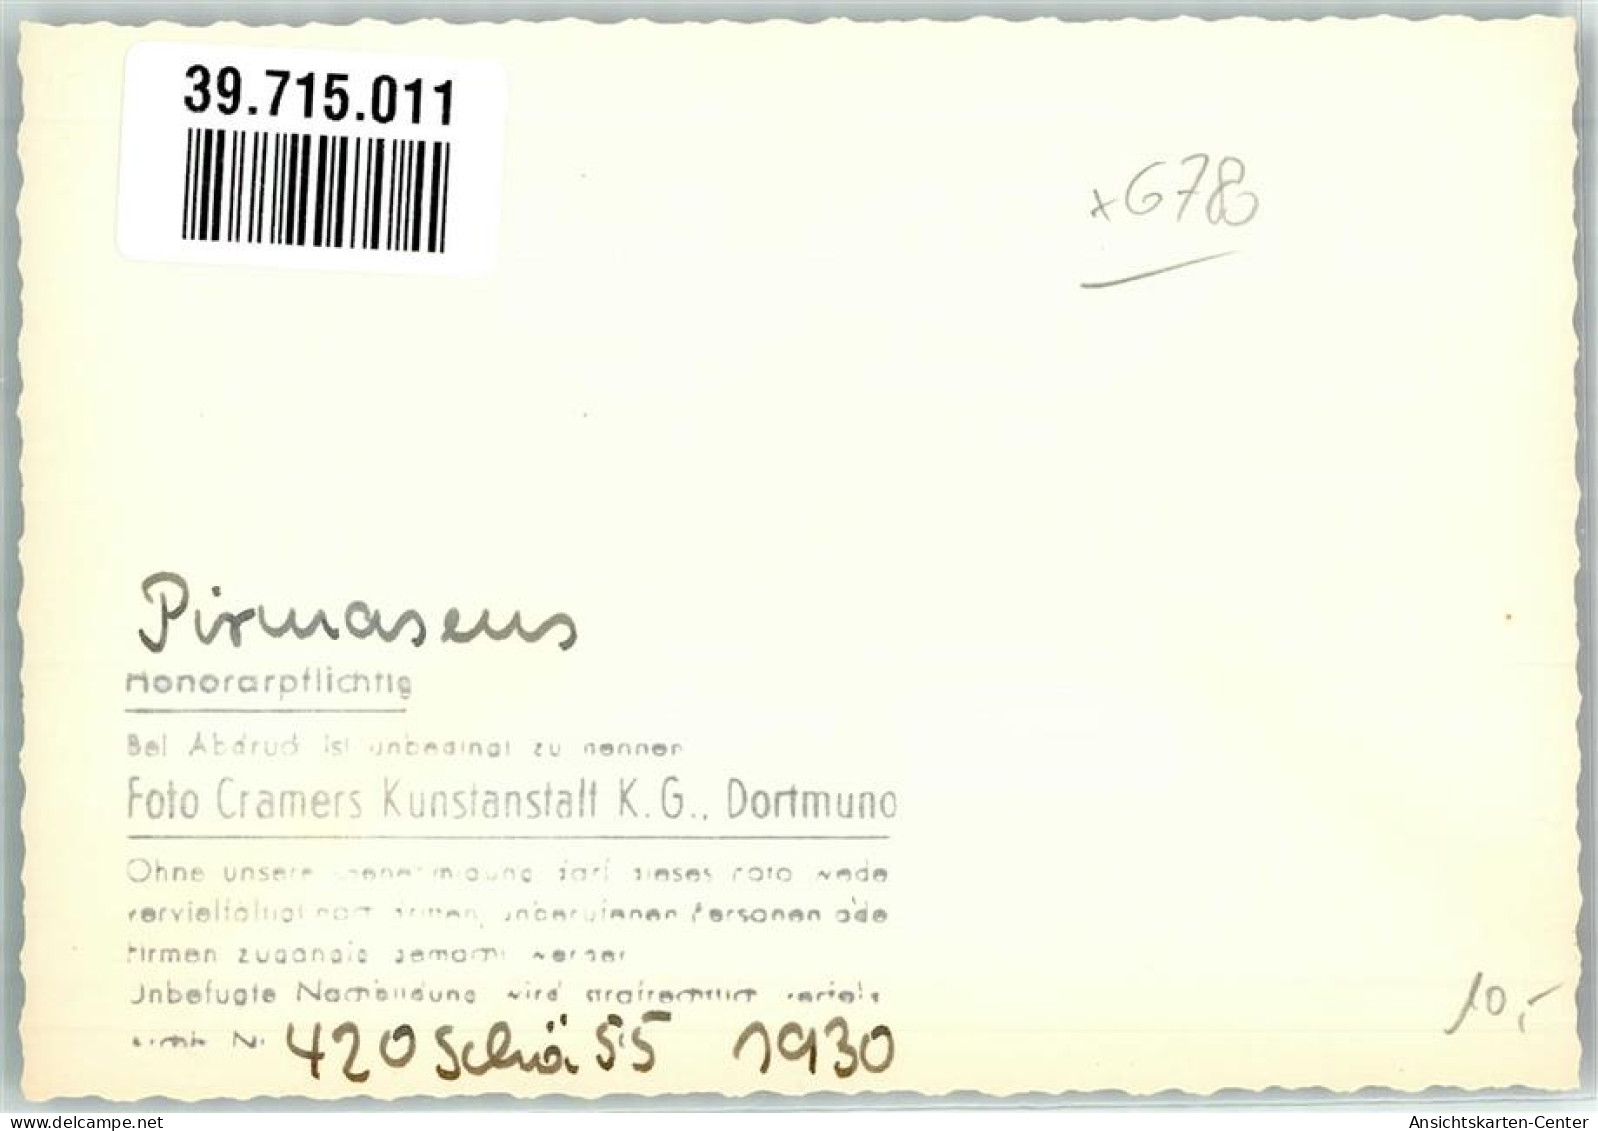 39715011 - Pirmasens - Pirmasens